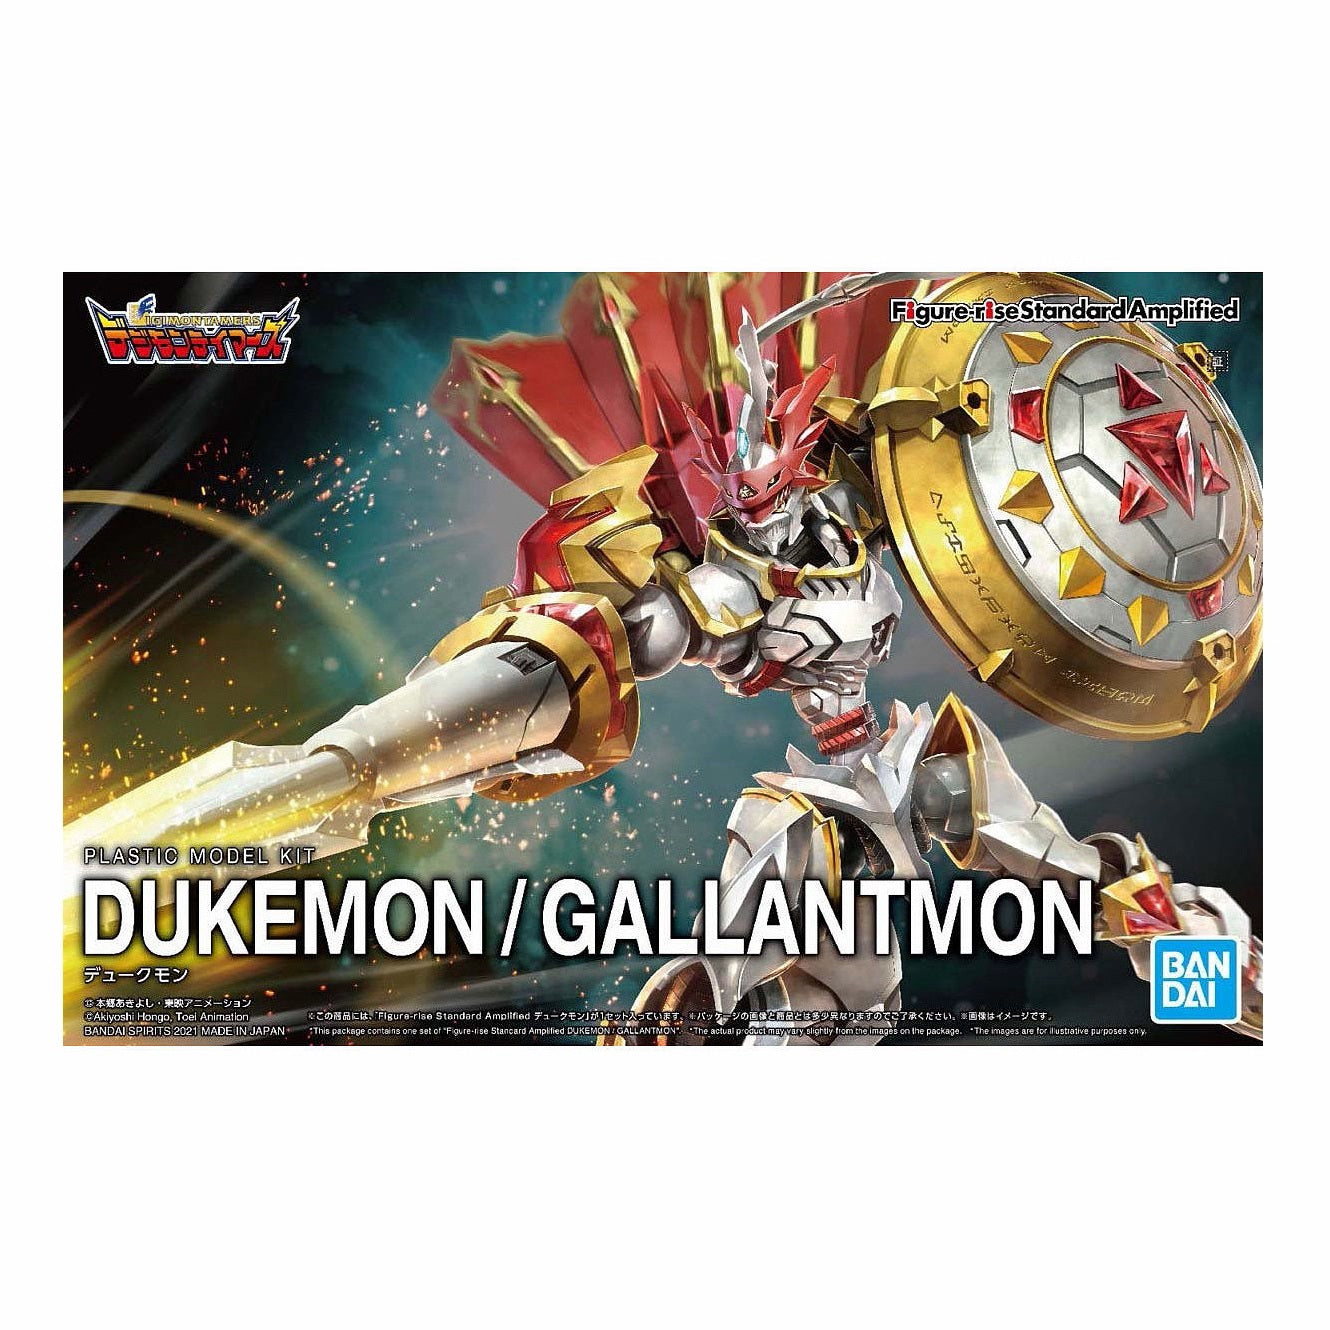 Digimon Dukemon Gallantmon Figure-Rise Standard Amplified Model Kit